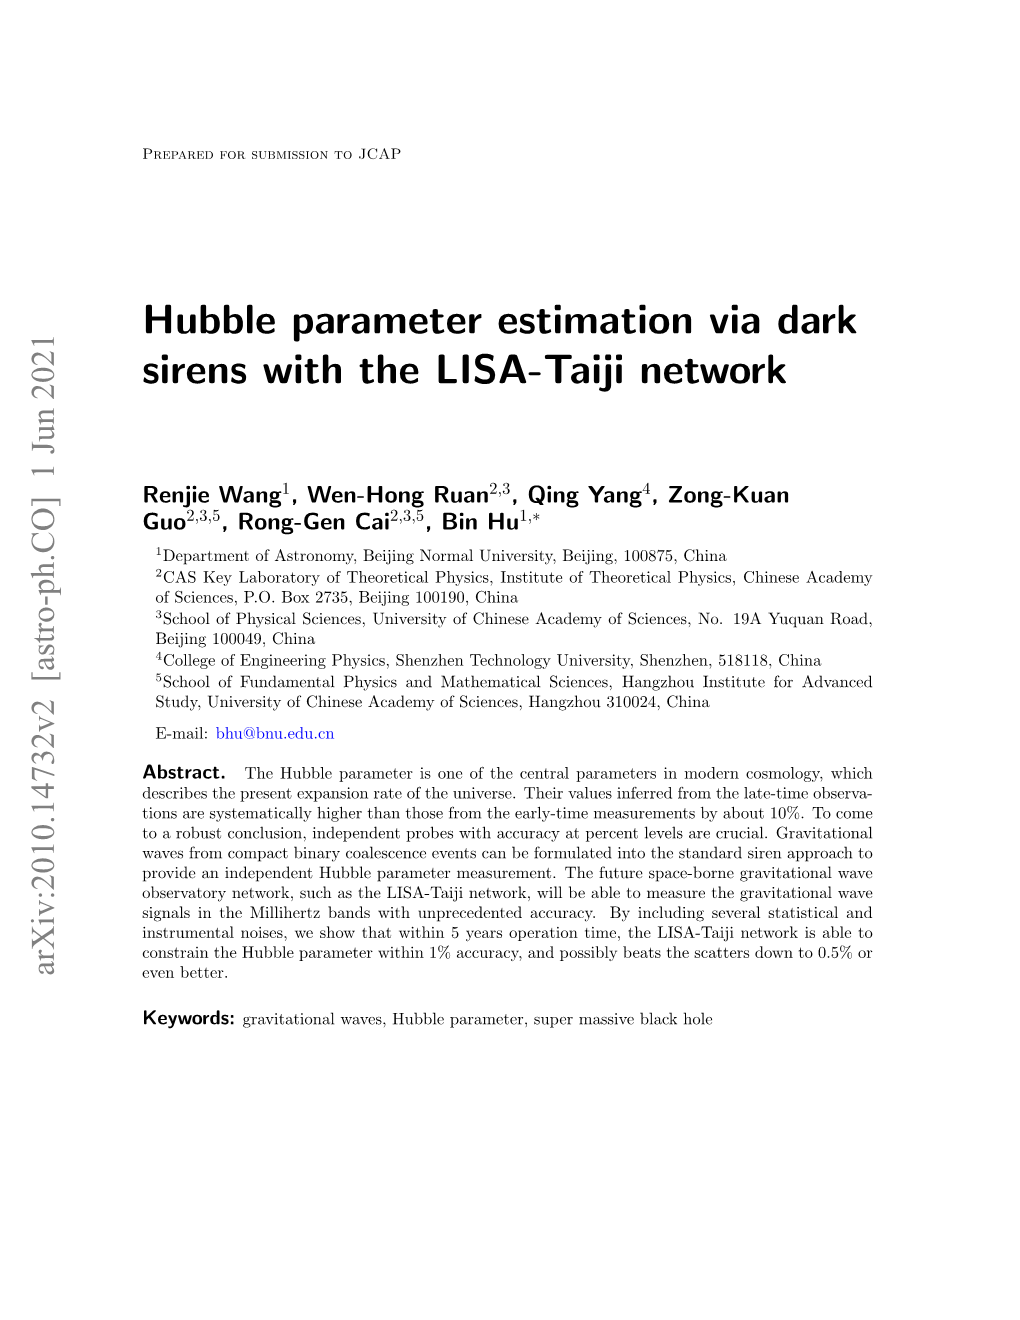 Hubble Parameter Estimation Via Dark Sirens with the LISA-Taiji Network